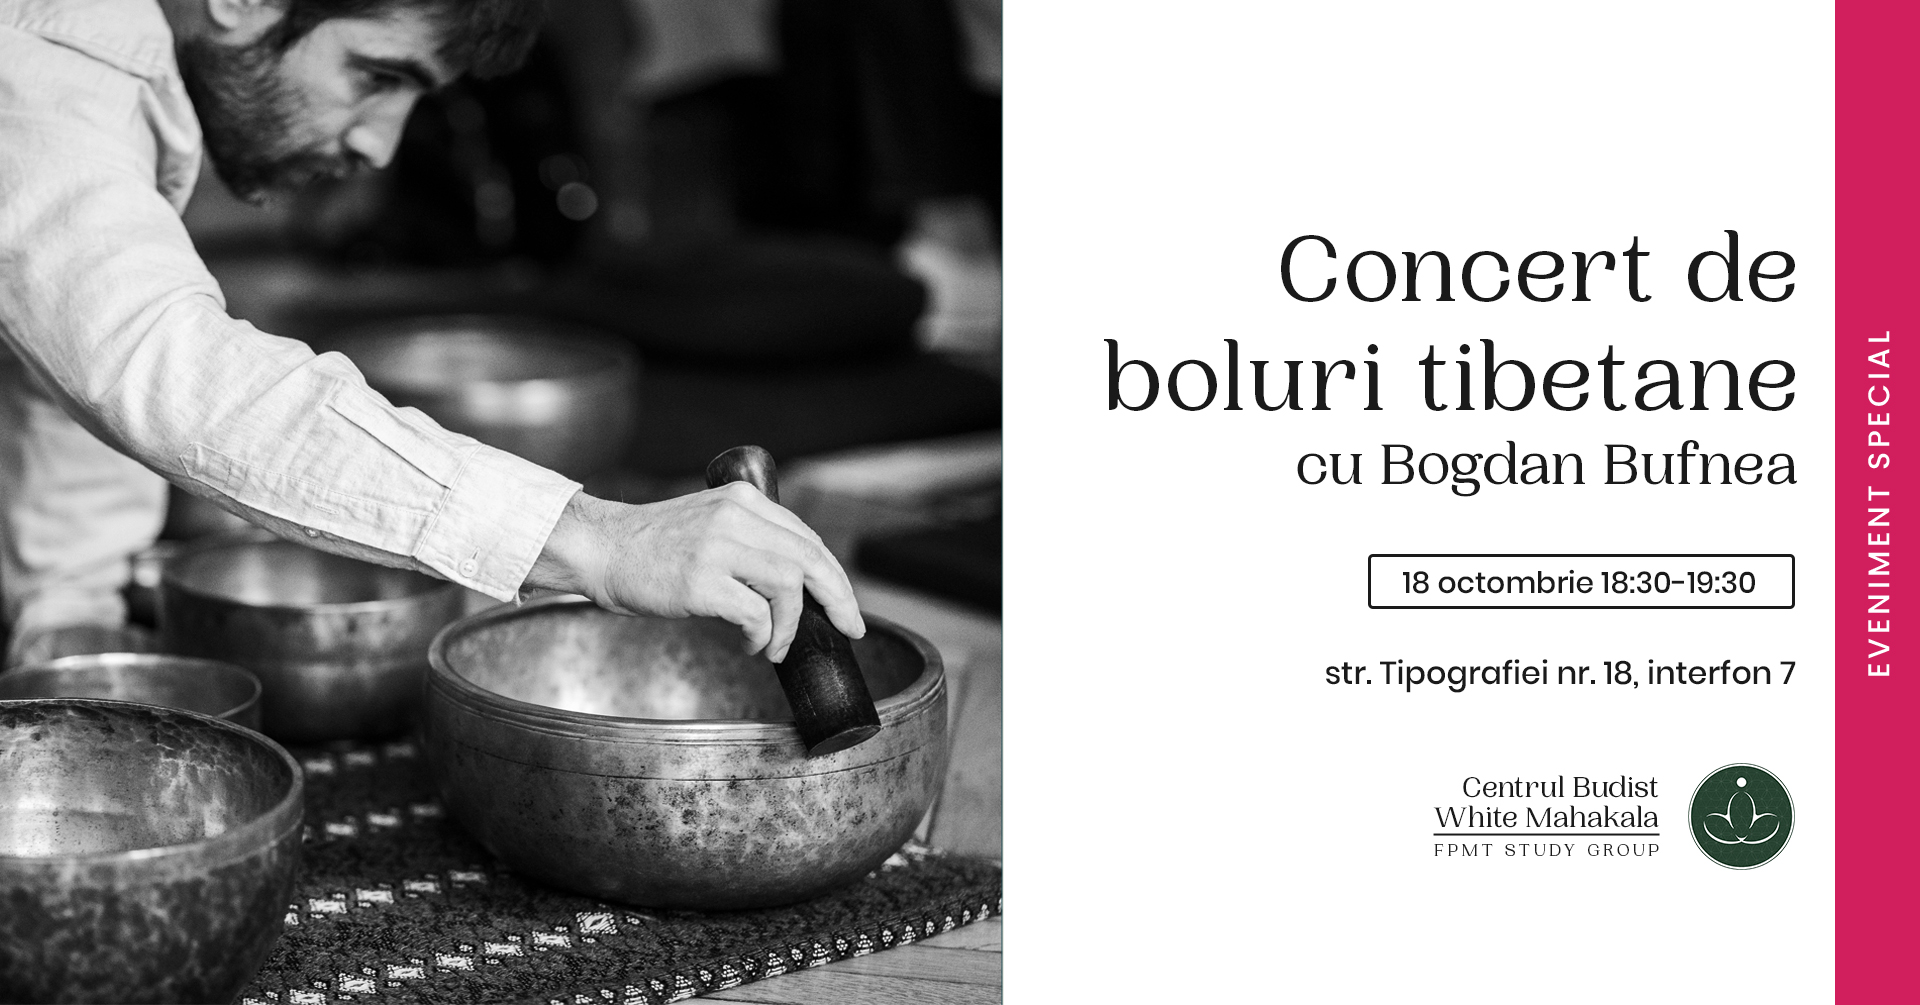 Concert de boluri tibetane cu Bogdan Bufnea